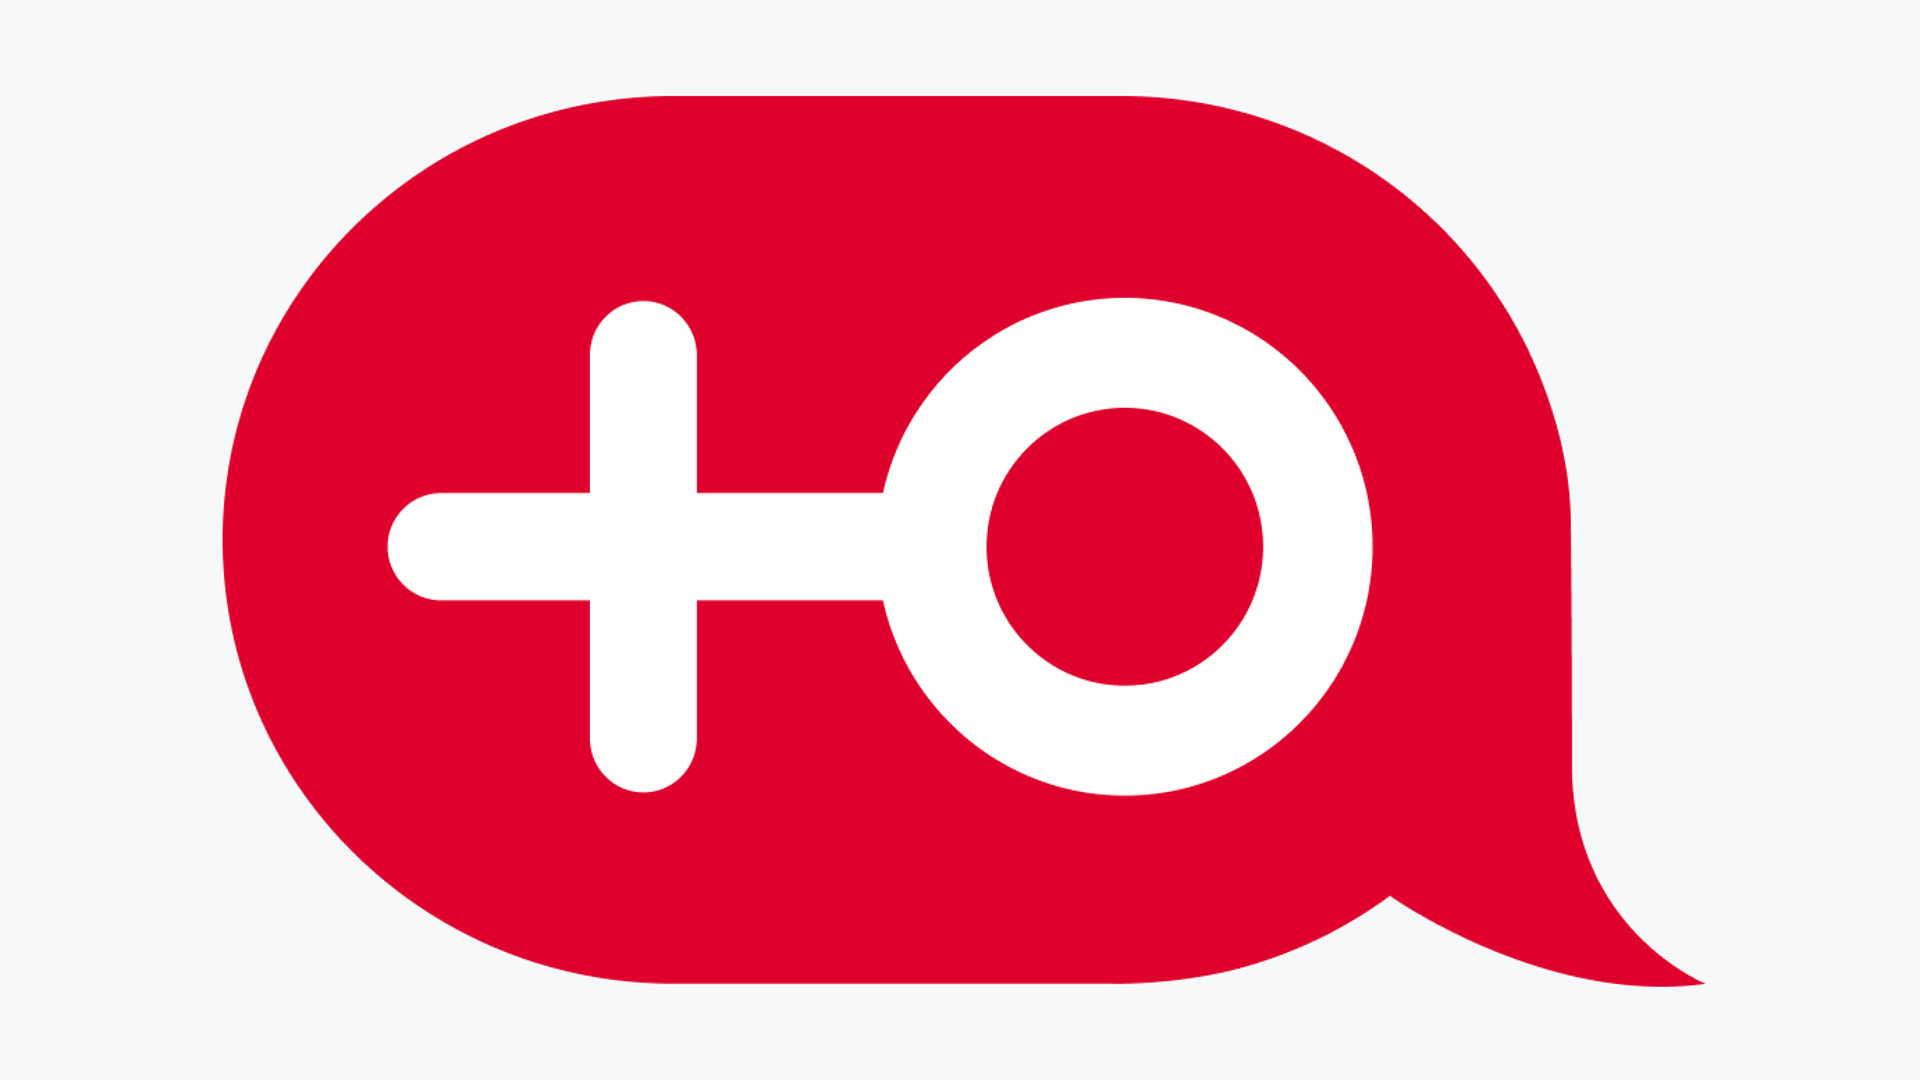 Телеканал лого. Канал ю. Значок канала ю. ЮТВ логотип. Логотип телеканала ю ТВ.